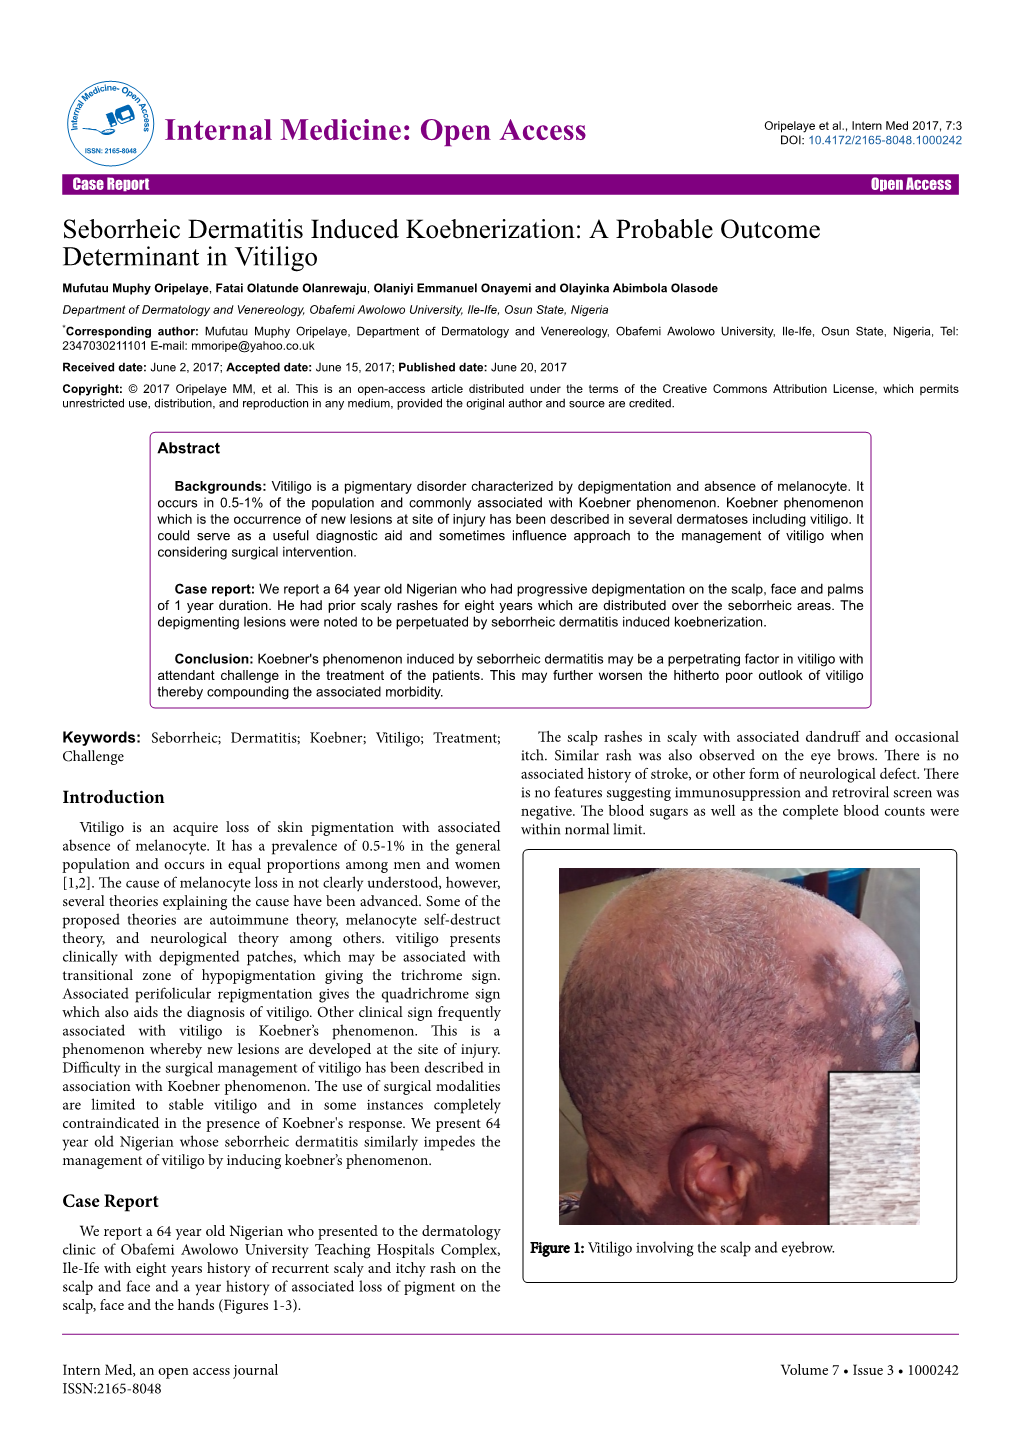 Seborrheic Dermatitis Induced Koebnerization: a Probable